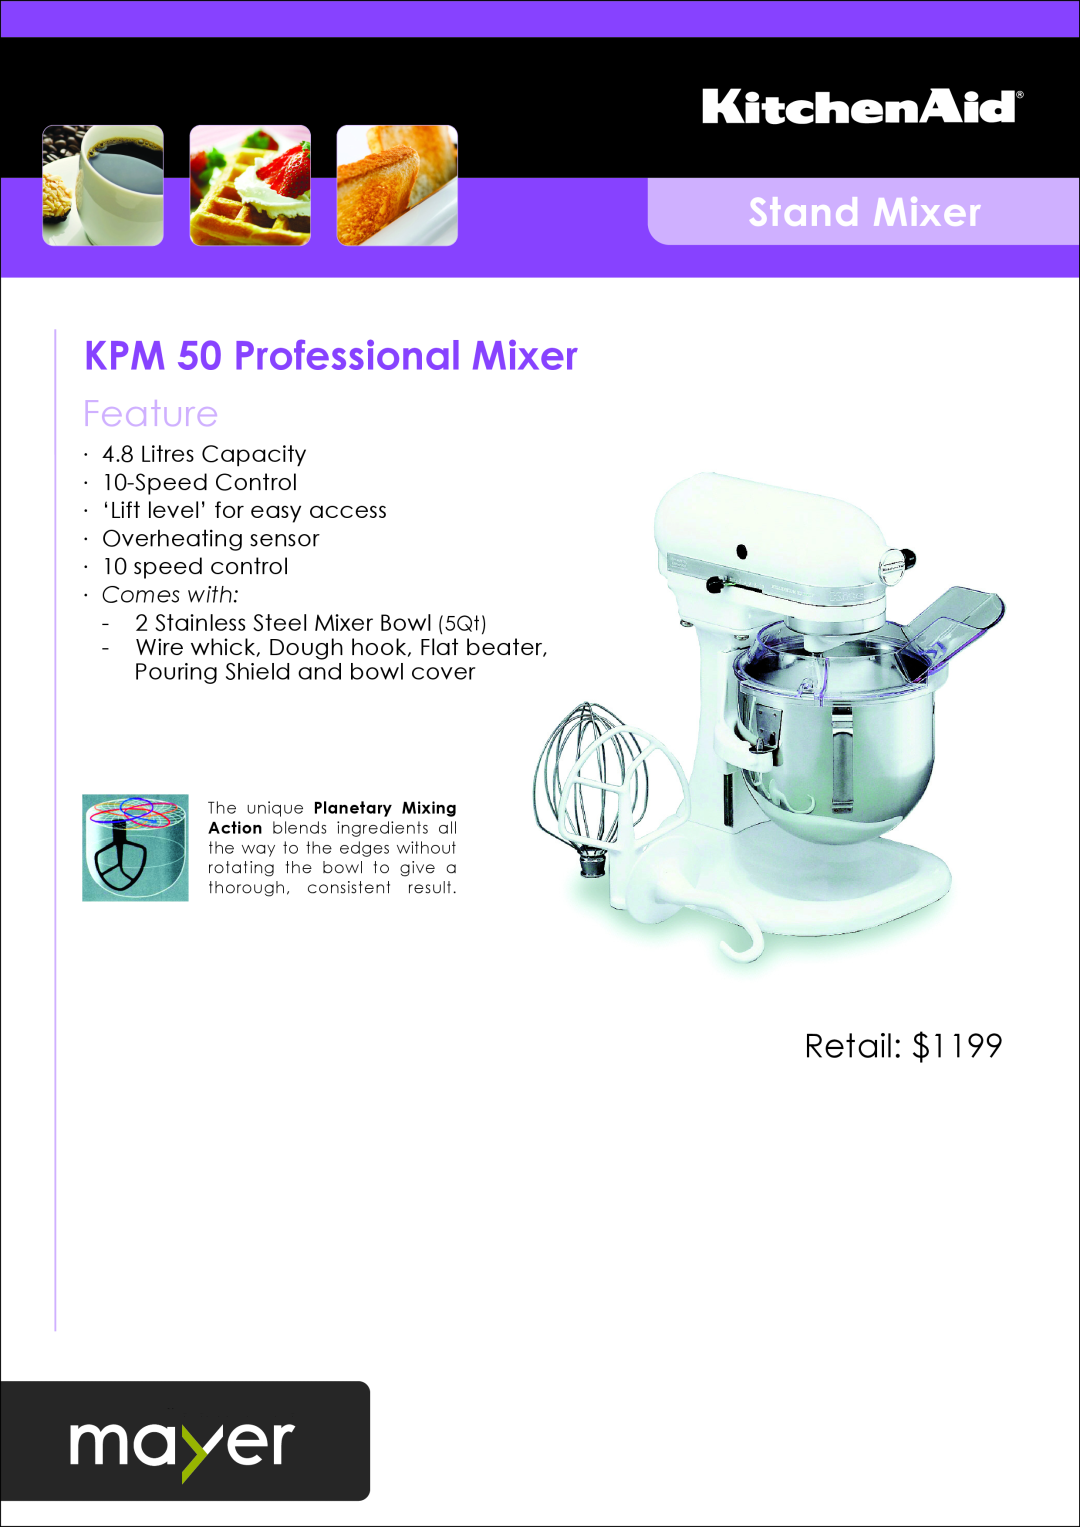 KitchenAid manual Stand Mixer, KPM 50 Professional Mixer, Feature, Retail $1199, Overheating sensor 10 speed control 